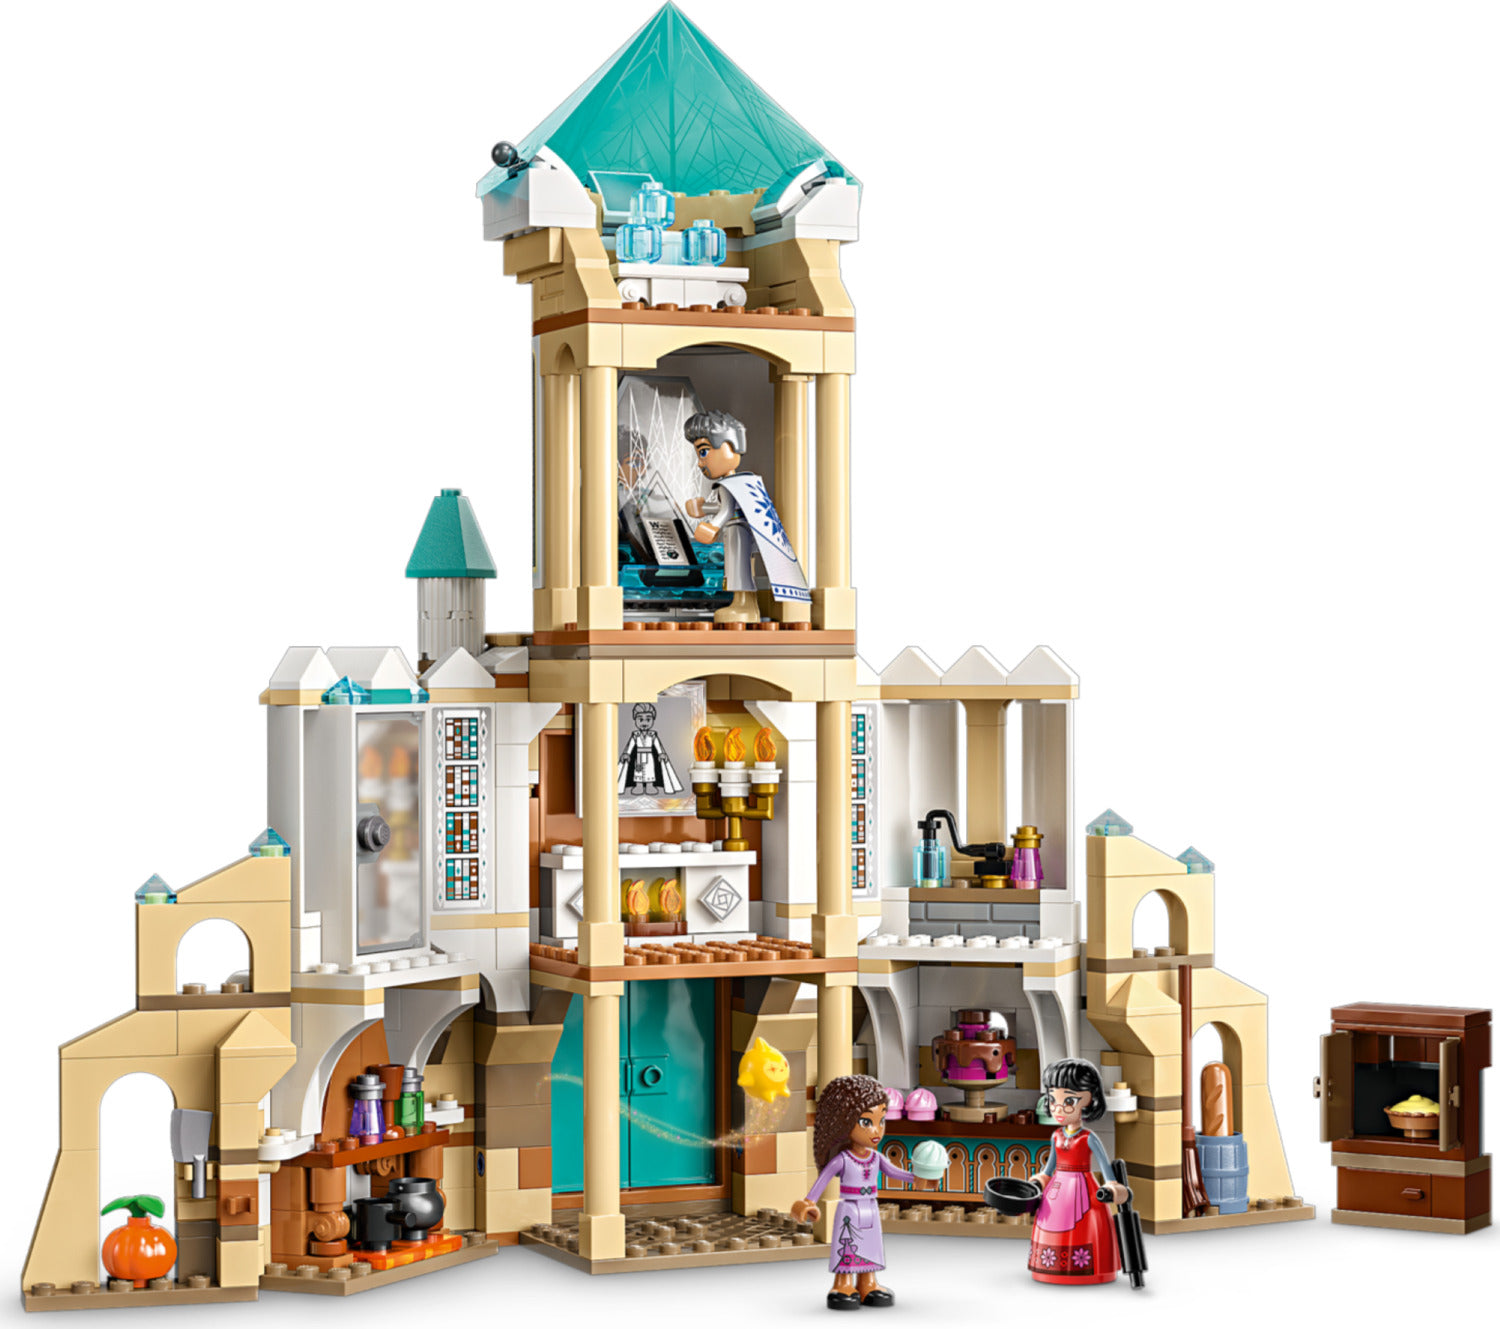 LEGO® Disney King Magnifico's Castle